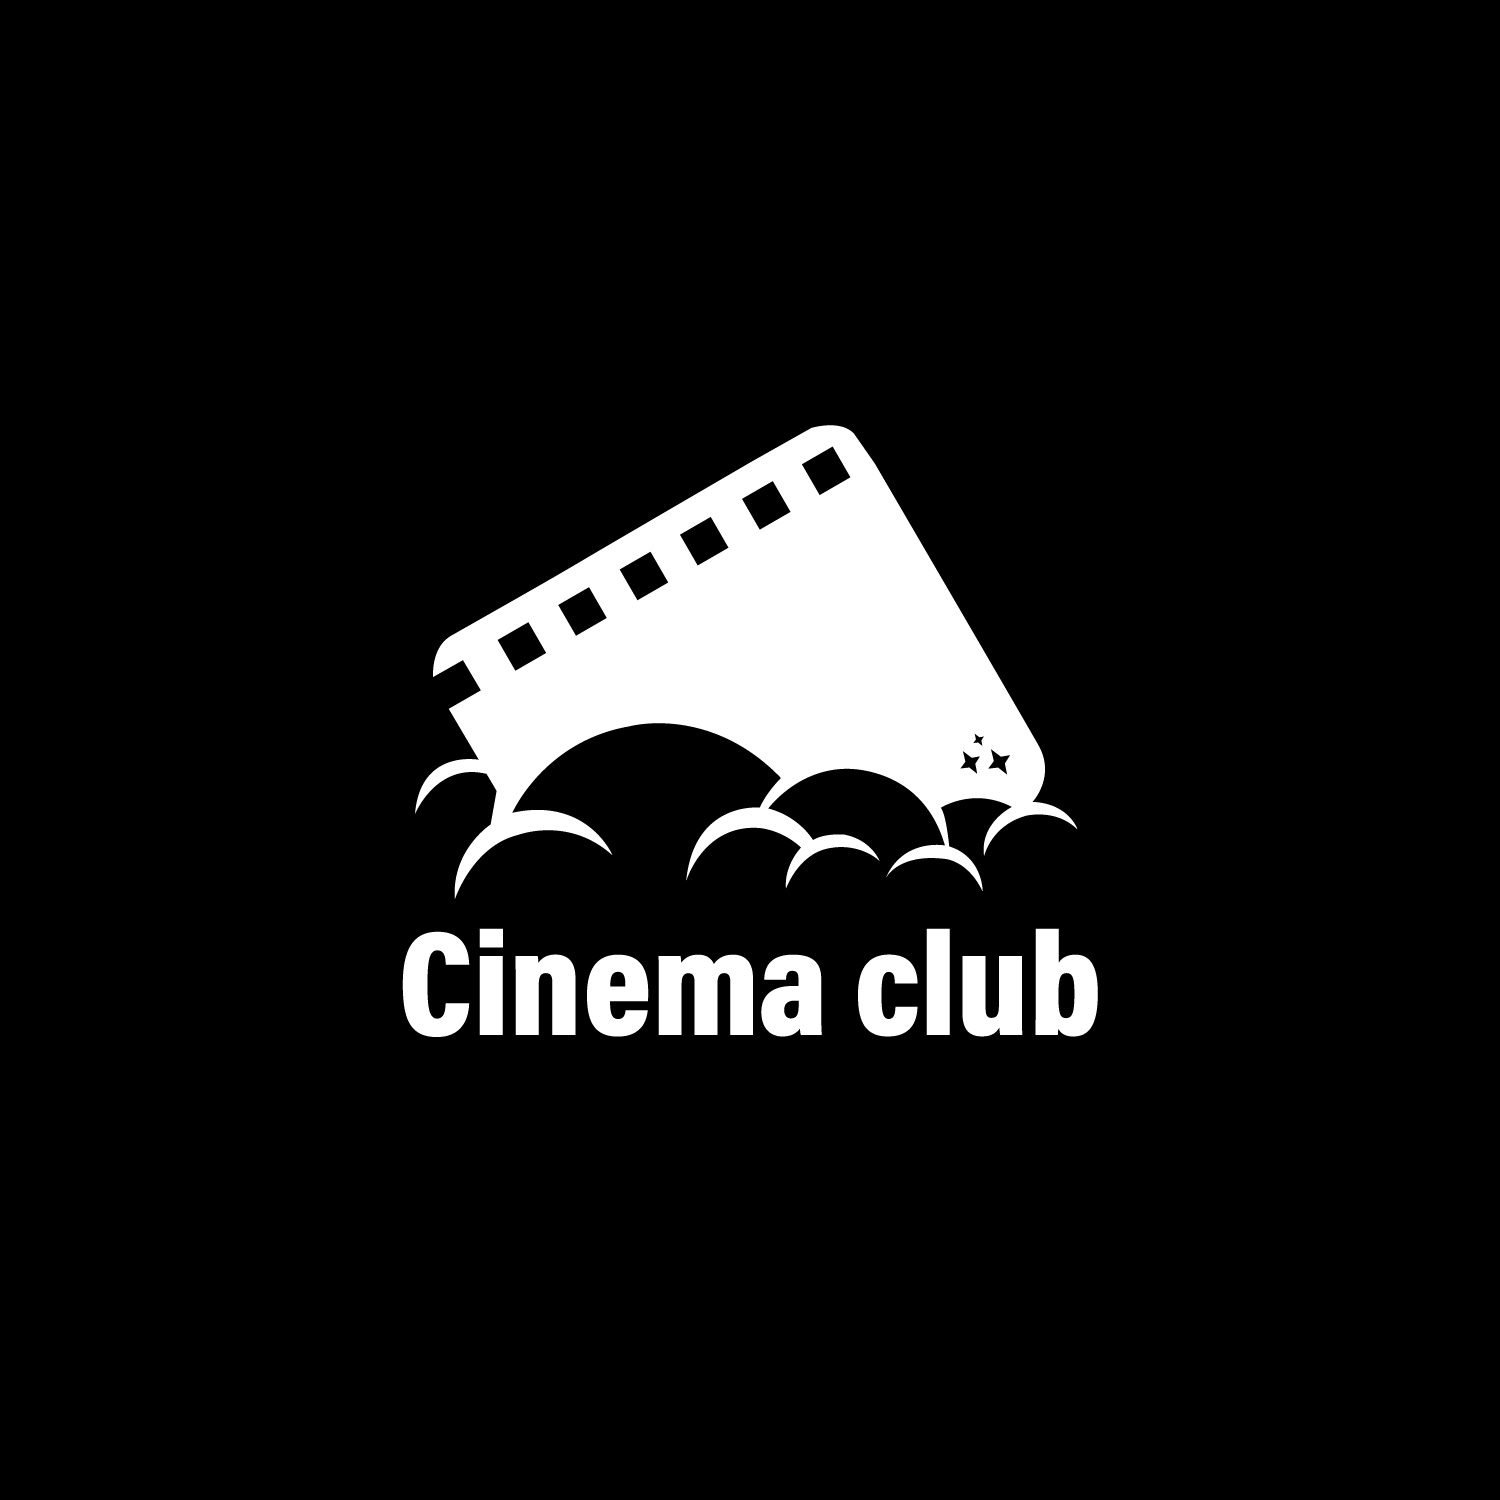 cinema logo preview image.